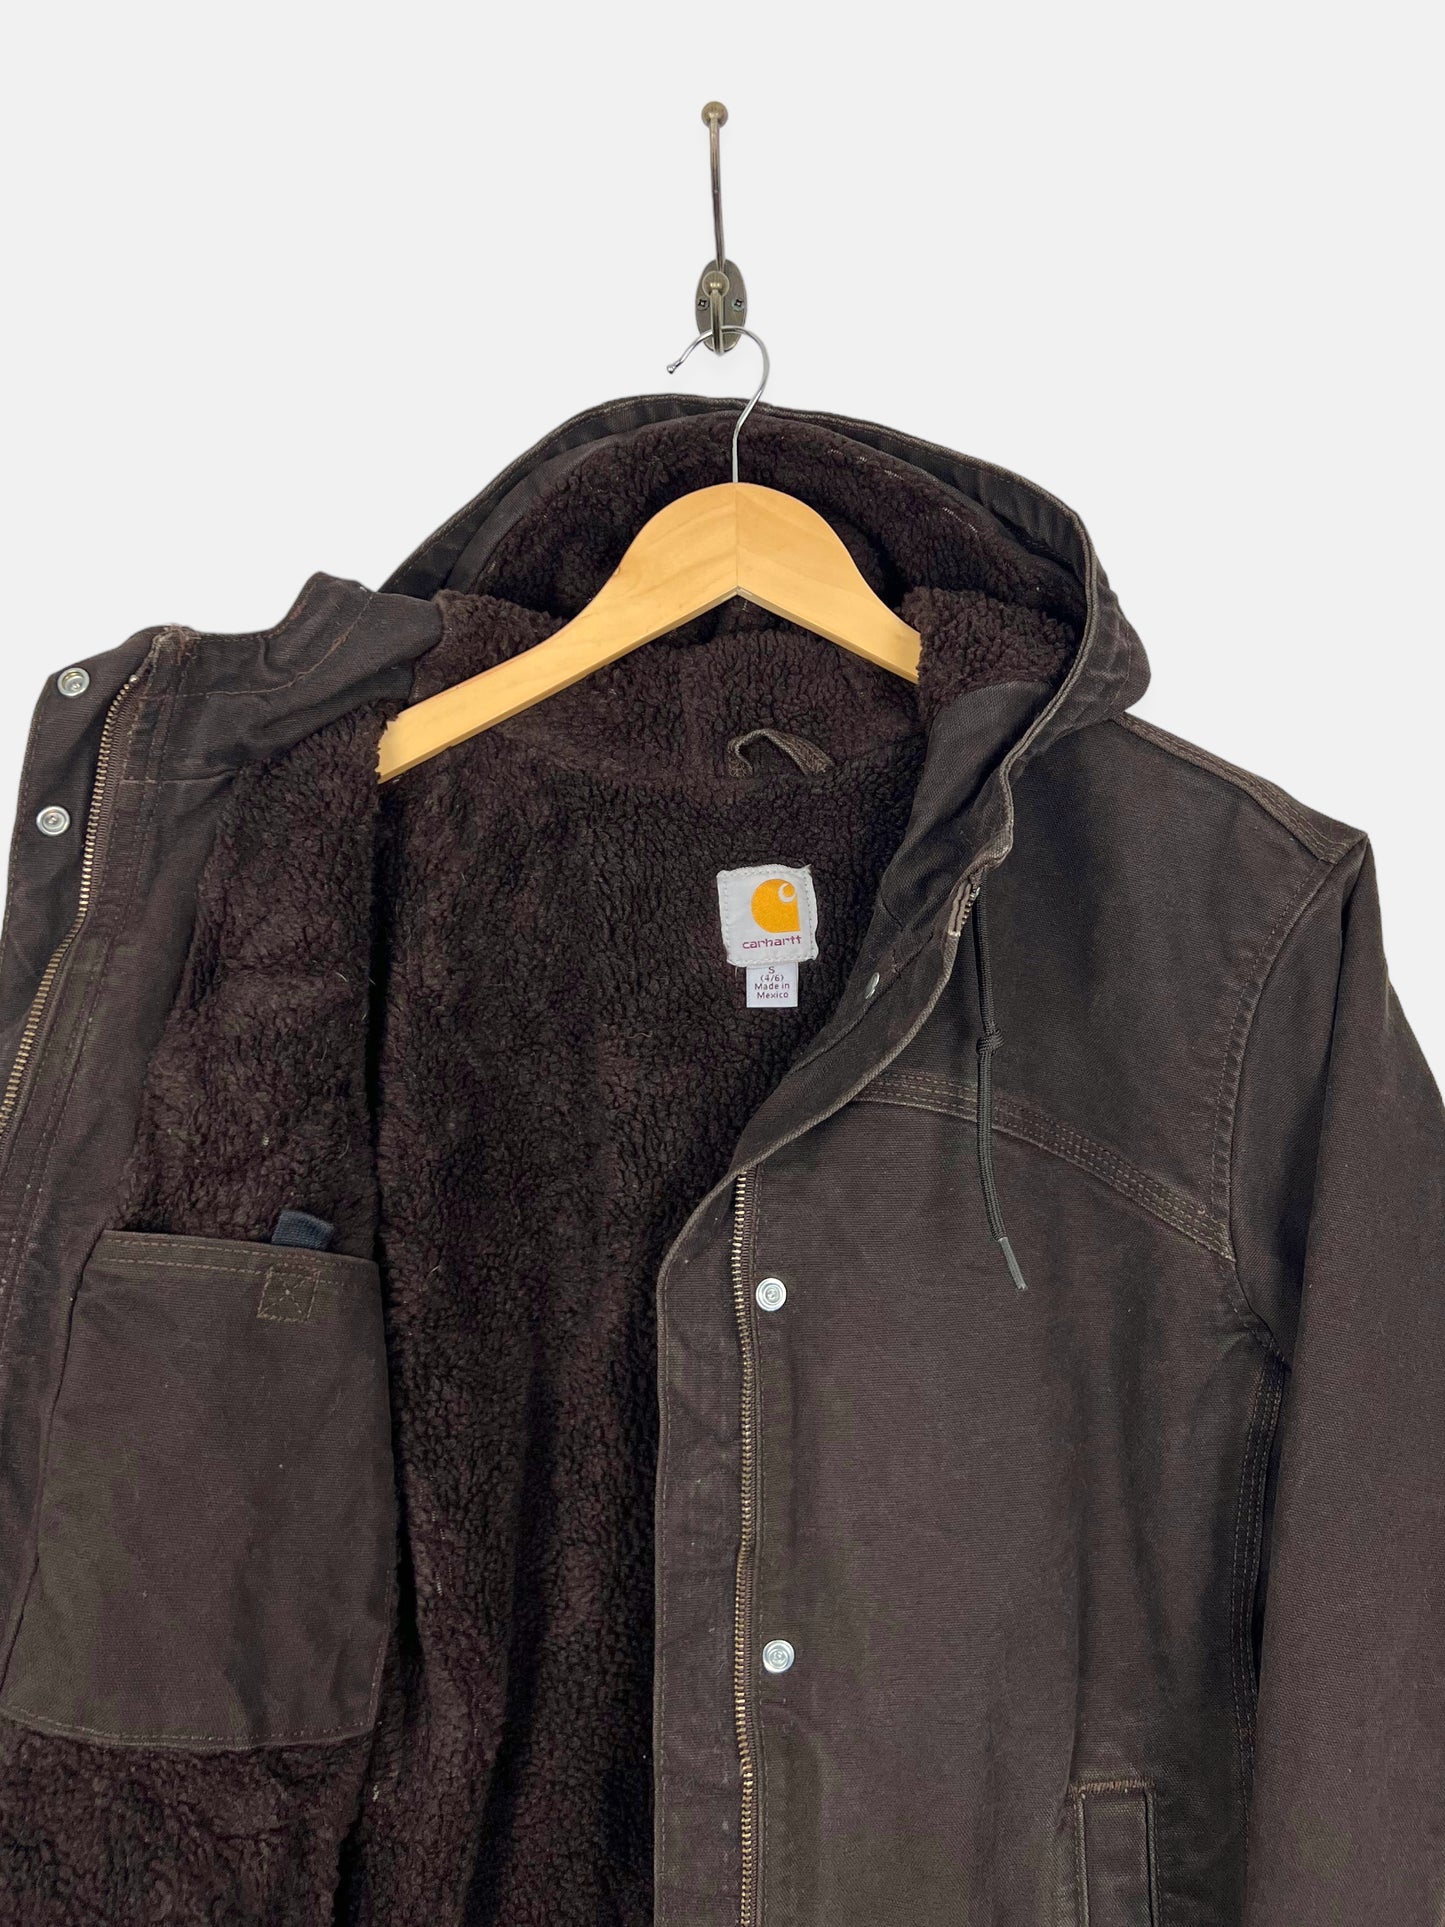 90's Carhartt Heavy Duty Sherpa Lined Vintage Jacket with Hood Size 10-12